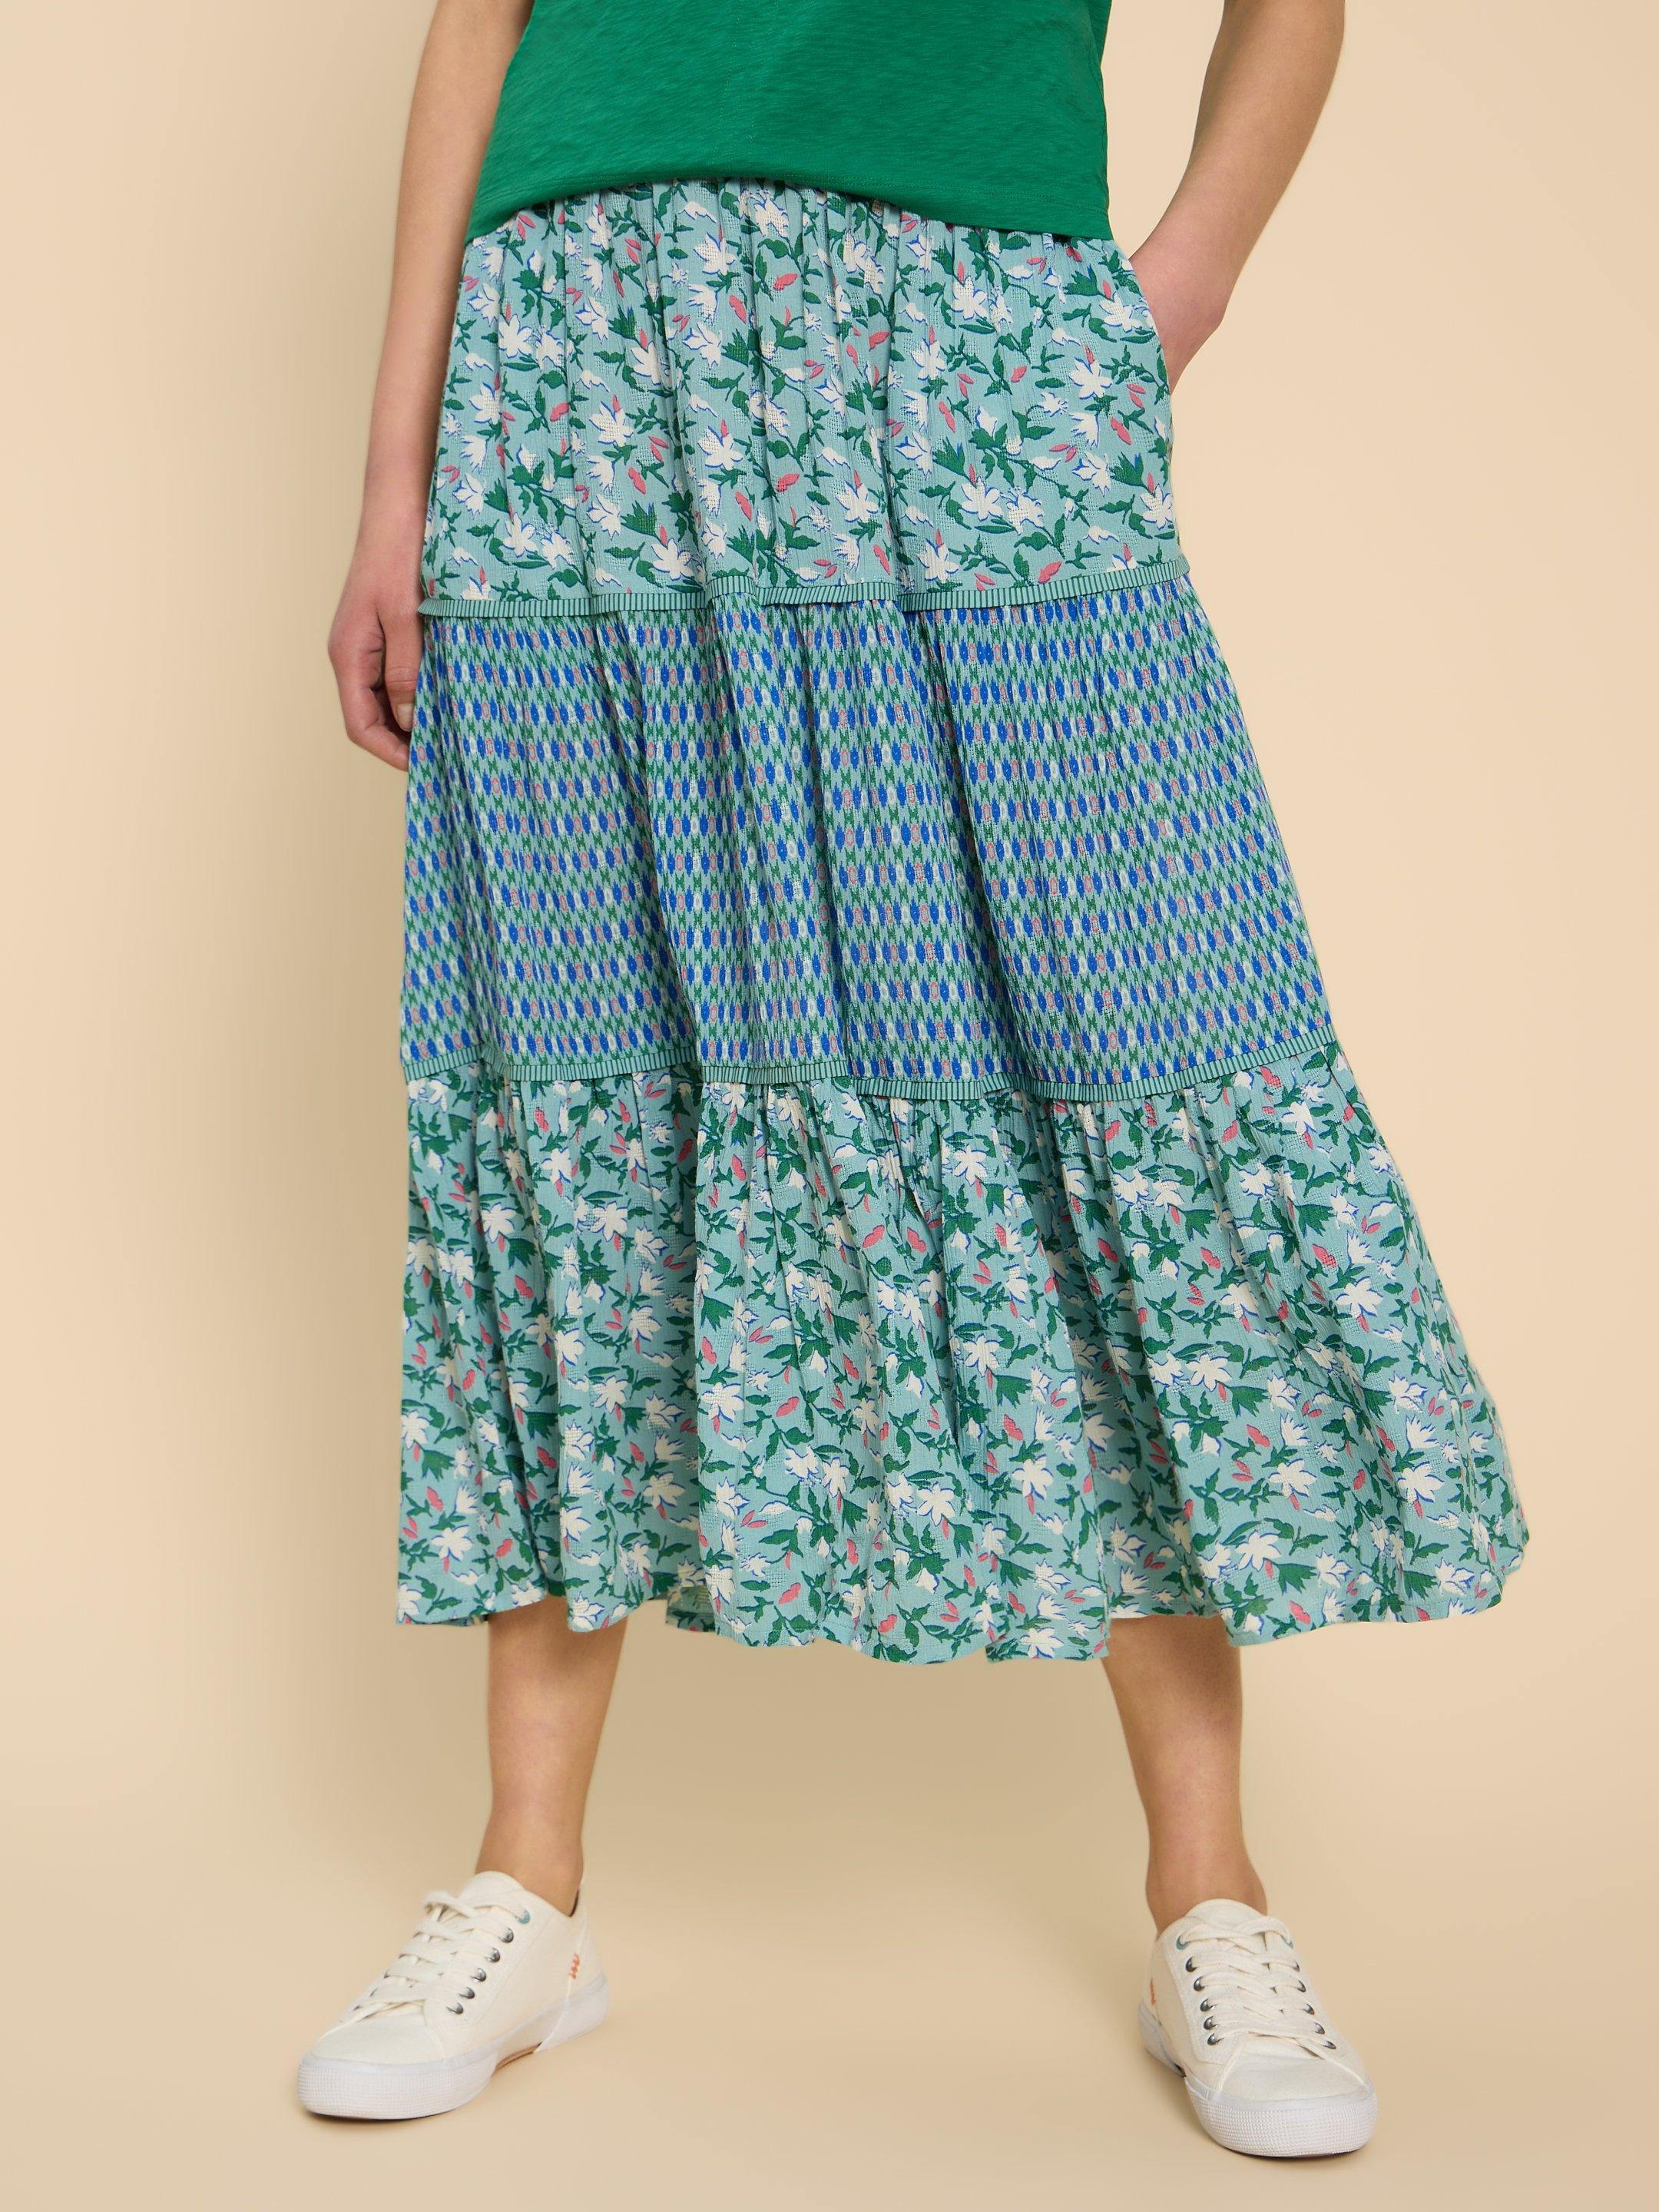 Mabel Mixed Print Skirt in TEAL PR - MODEL DETAIL